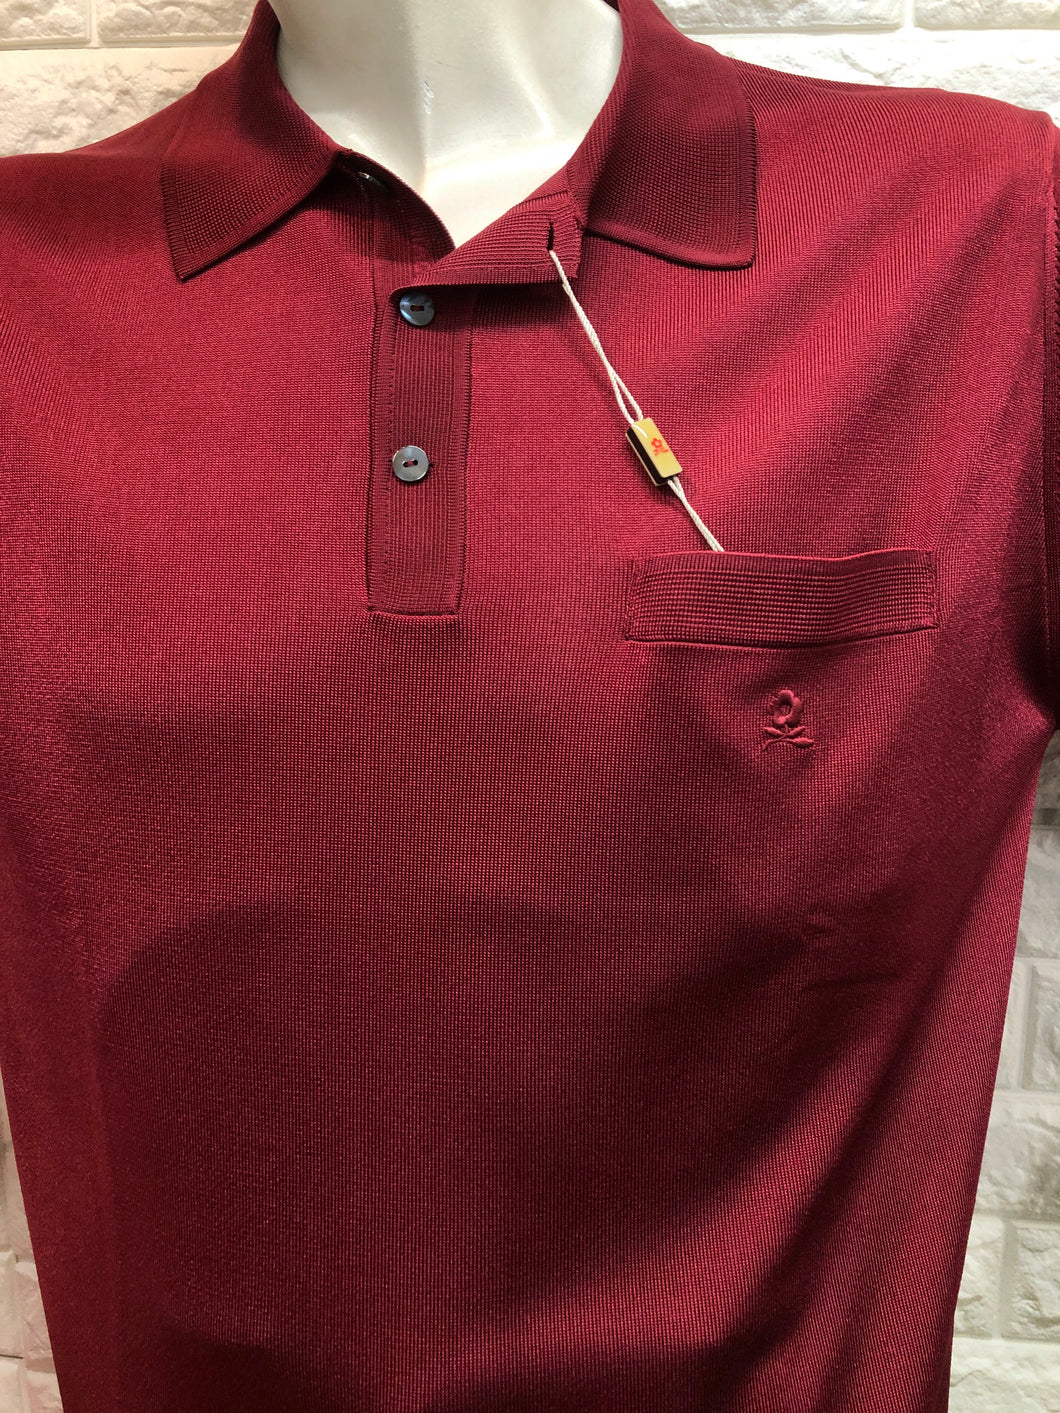 長袖絲質MONTAGUT long sleeves fil lumiere- 320268-9195 棗紅色plain pattern